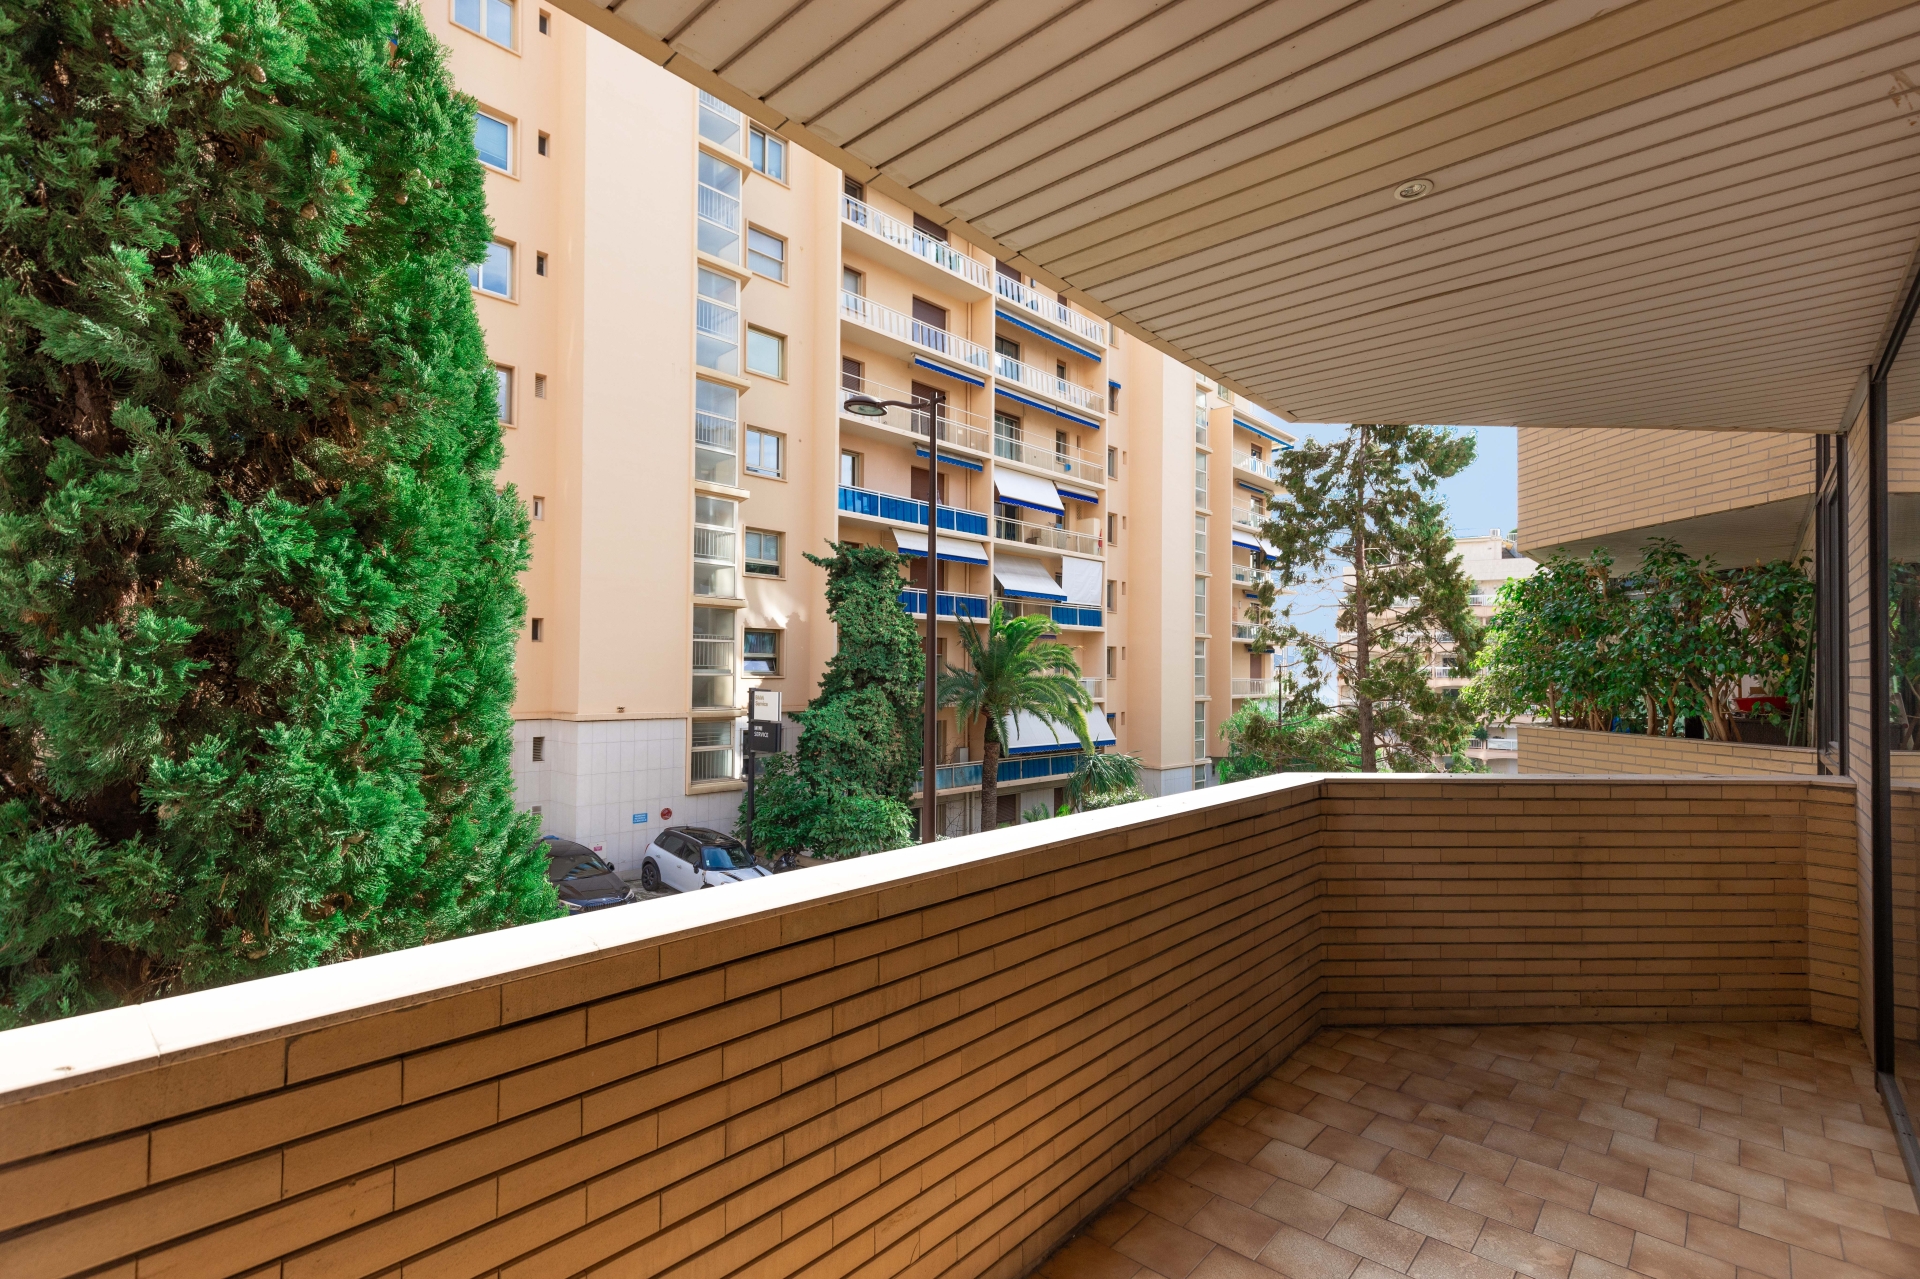 Dotta Appartement de 2 pieces a vendre - SAINT ANDRE - Monte-Carlo - Monaco - img074a8620